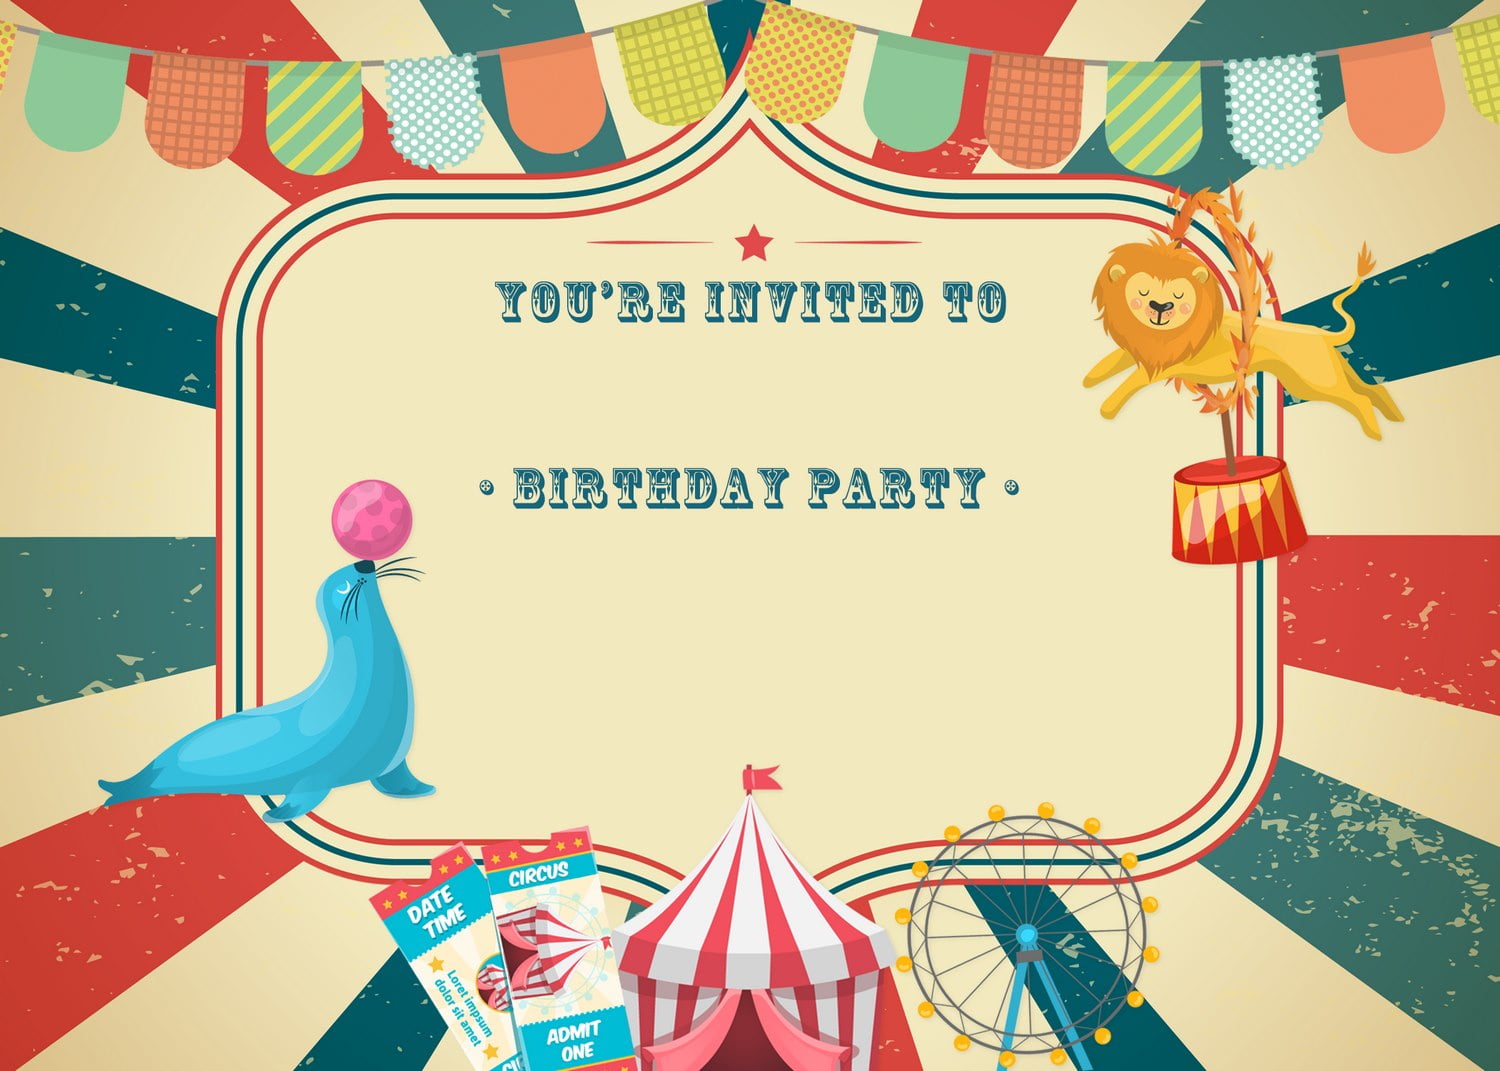 MaTyggqktlkVkyqr7MxIDjlWUaYk1XlGA0OVcC6WegQG9hwkpDUr0jGupcTfel1RkypIhwhIZxizzDPof4mDlBcT2FsB5mYDCmrvuMySkStQTaBkgyI63q8HcDL94xL5qLl0eMA tVHxV CNC2Go uM instore activations, family days, carnivals and birthdays